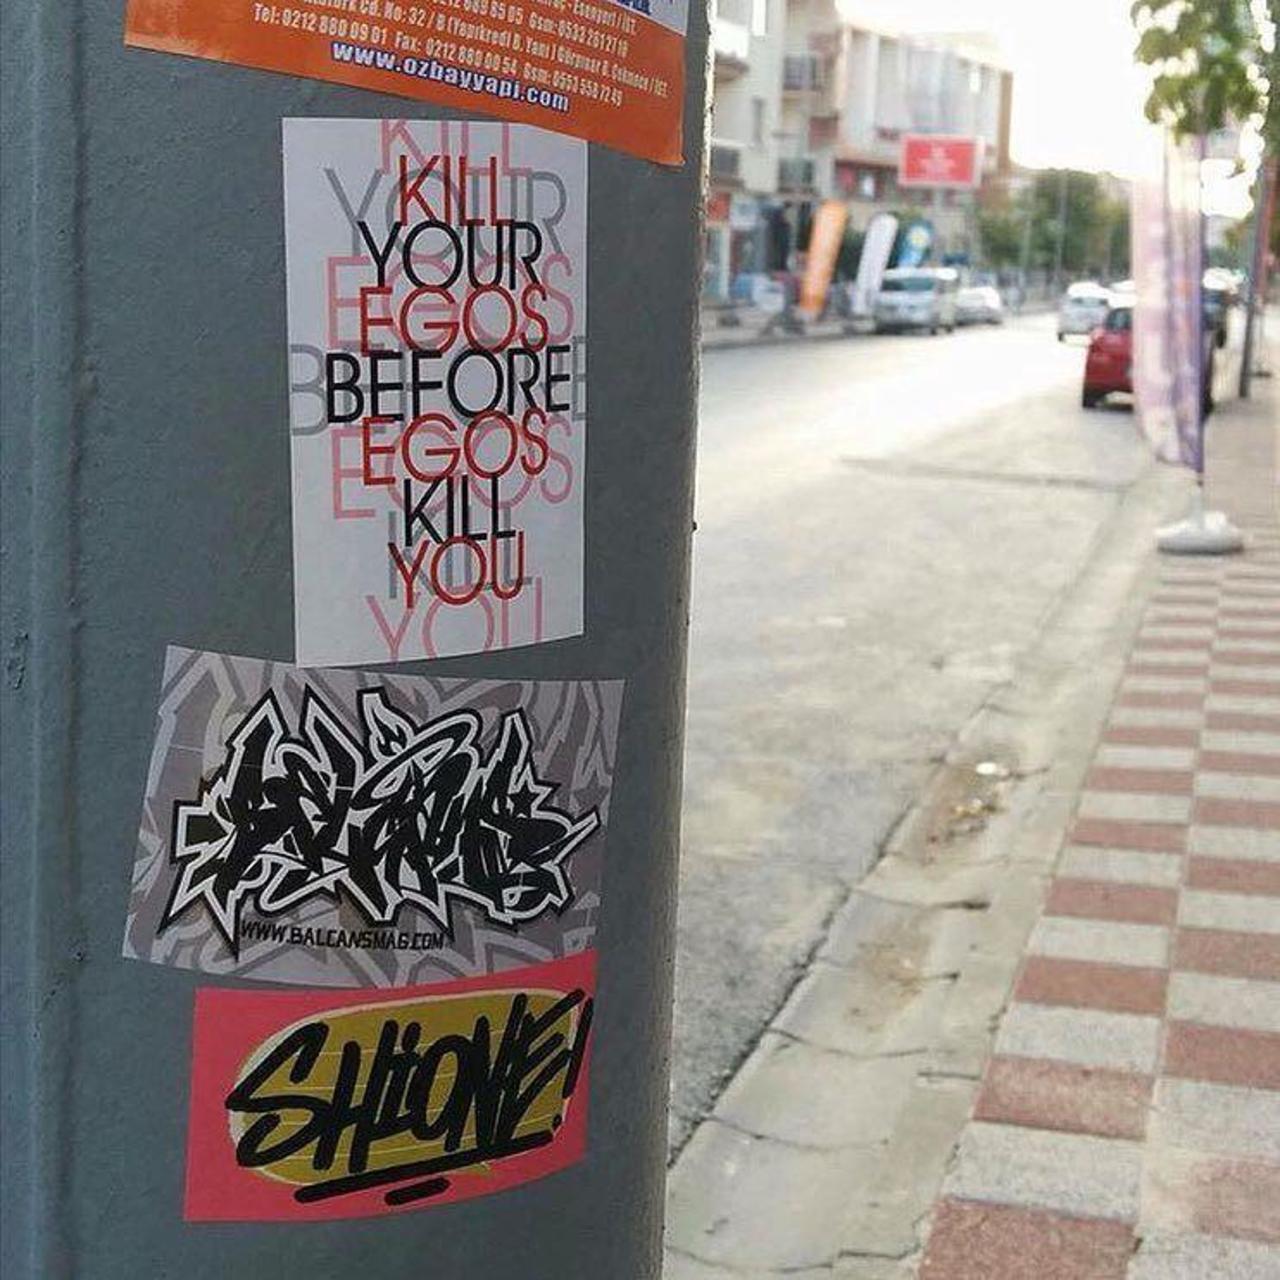 via #graffititurkiye "http://bit.ly/1jHf6c3" #graffiti #streetart http://t.co/gFwAokkDu8